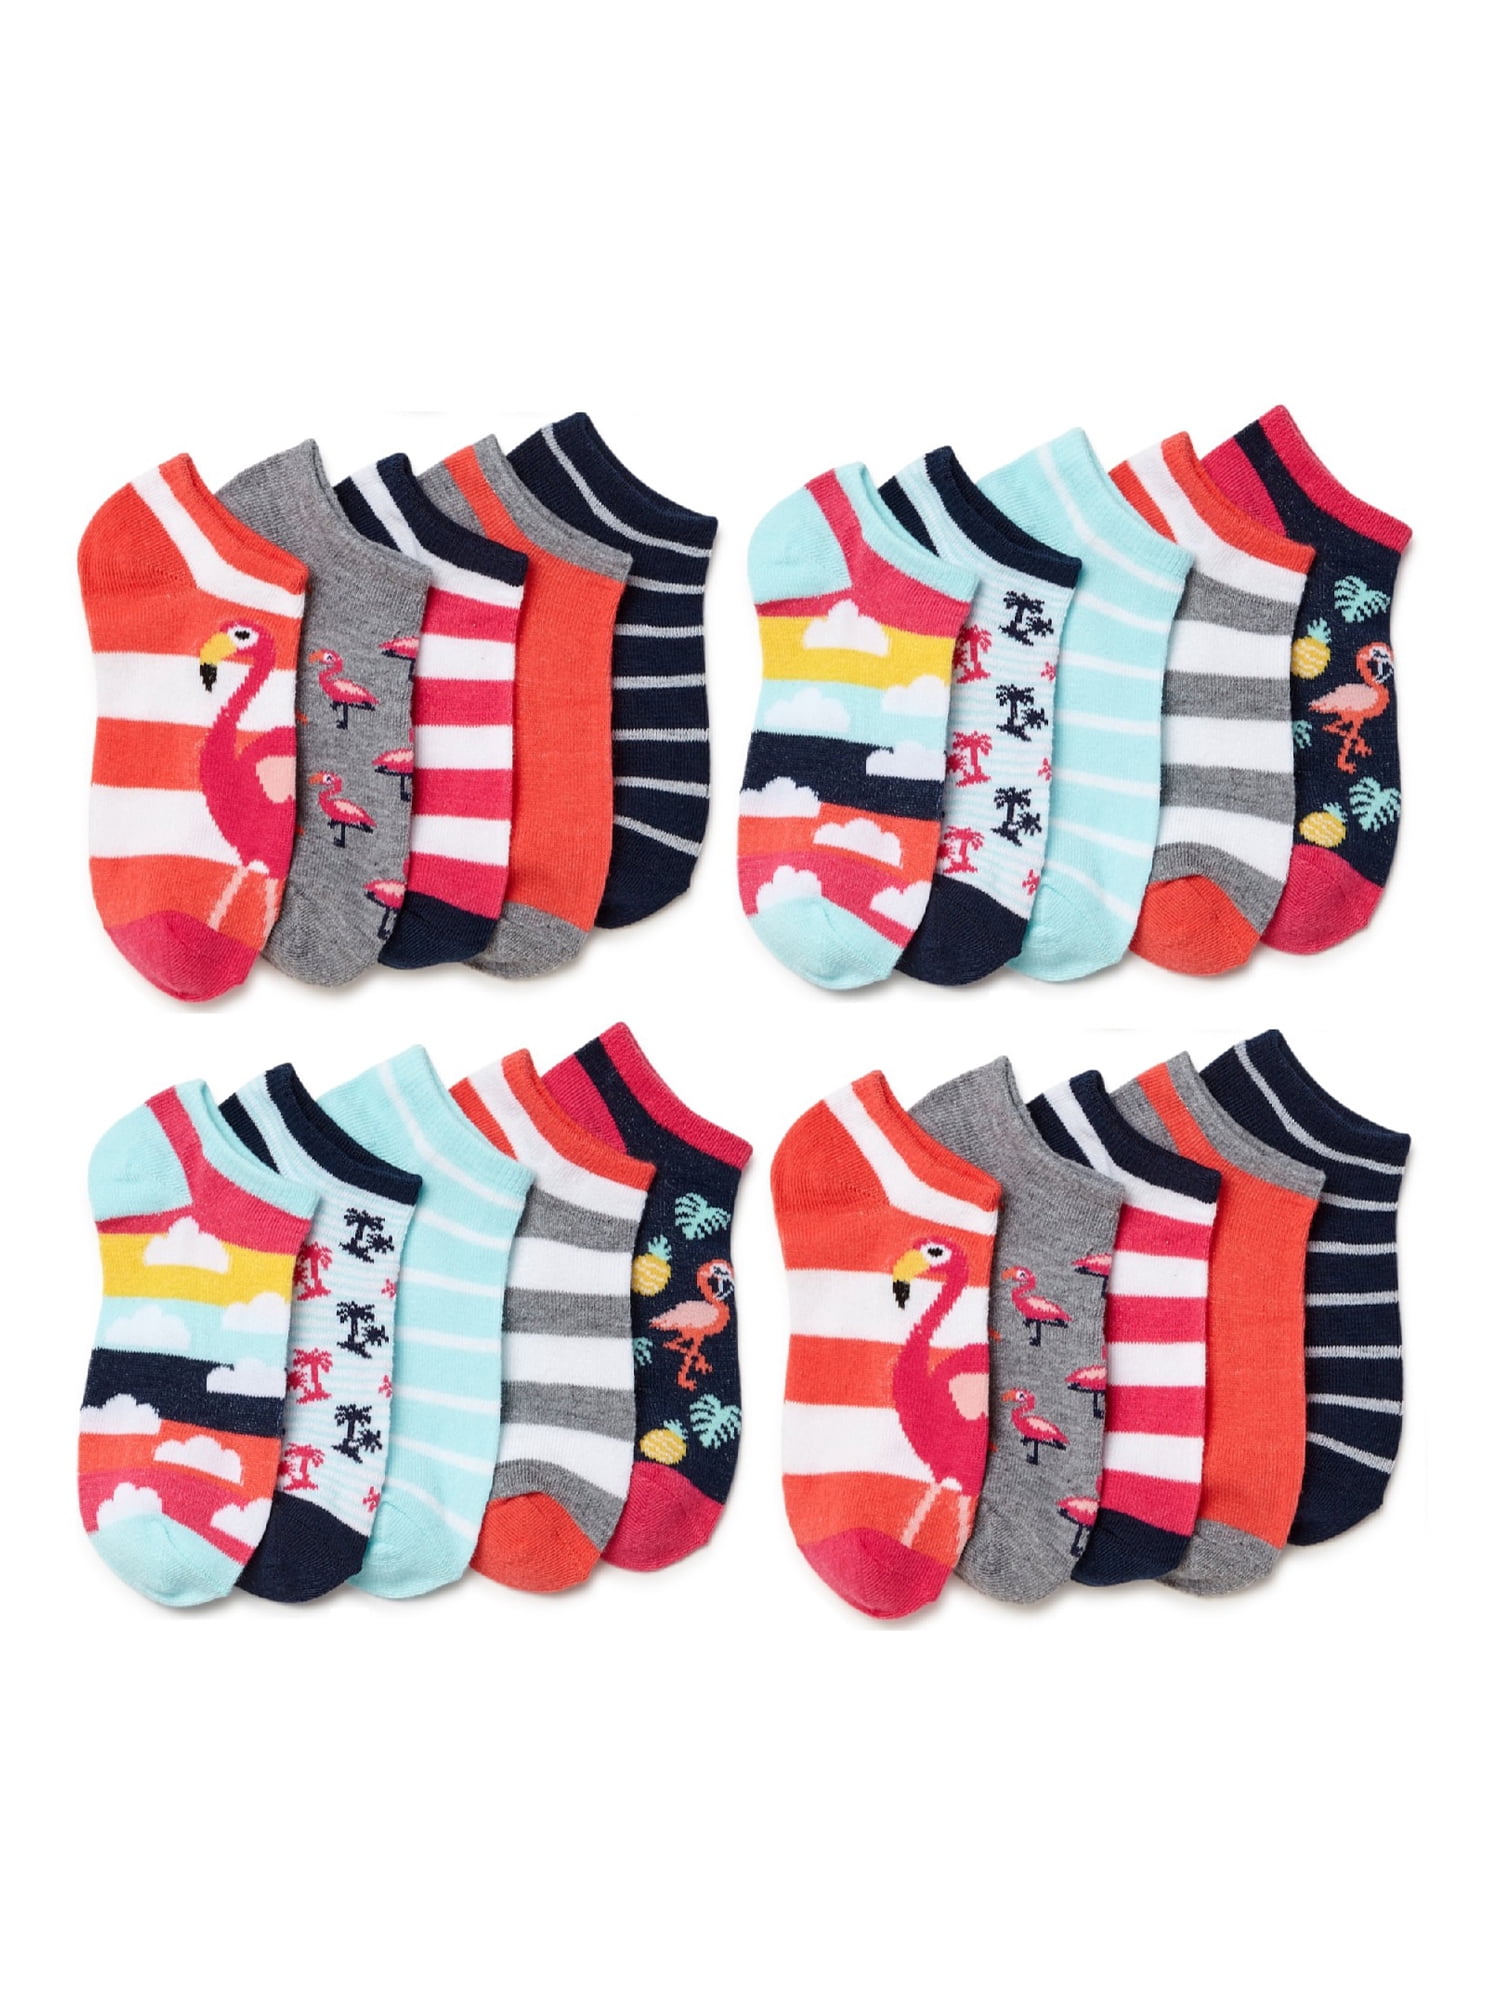 Wonder Nation Girls' No Show Socks 15 Pair Size M 10.5-4 Multi Pack New Designs 